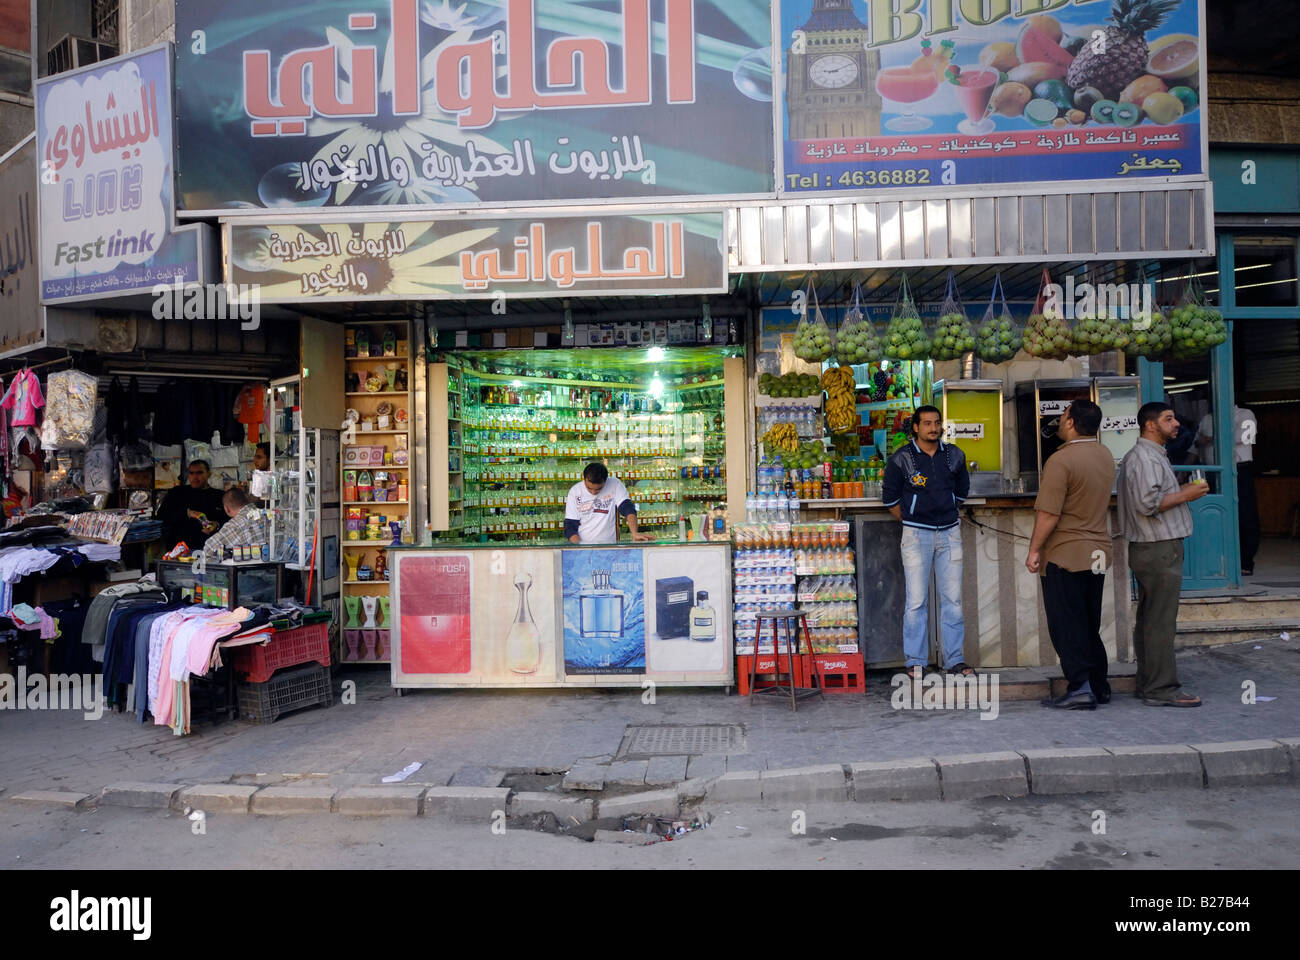 shop in the street market, Amman, Jordan, Arabia Stock Photo